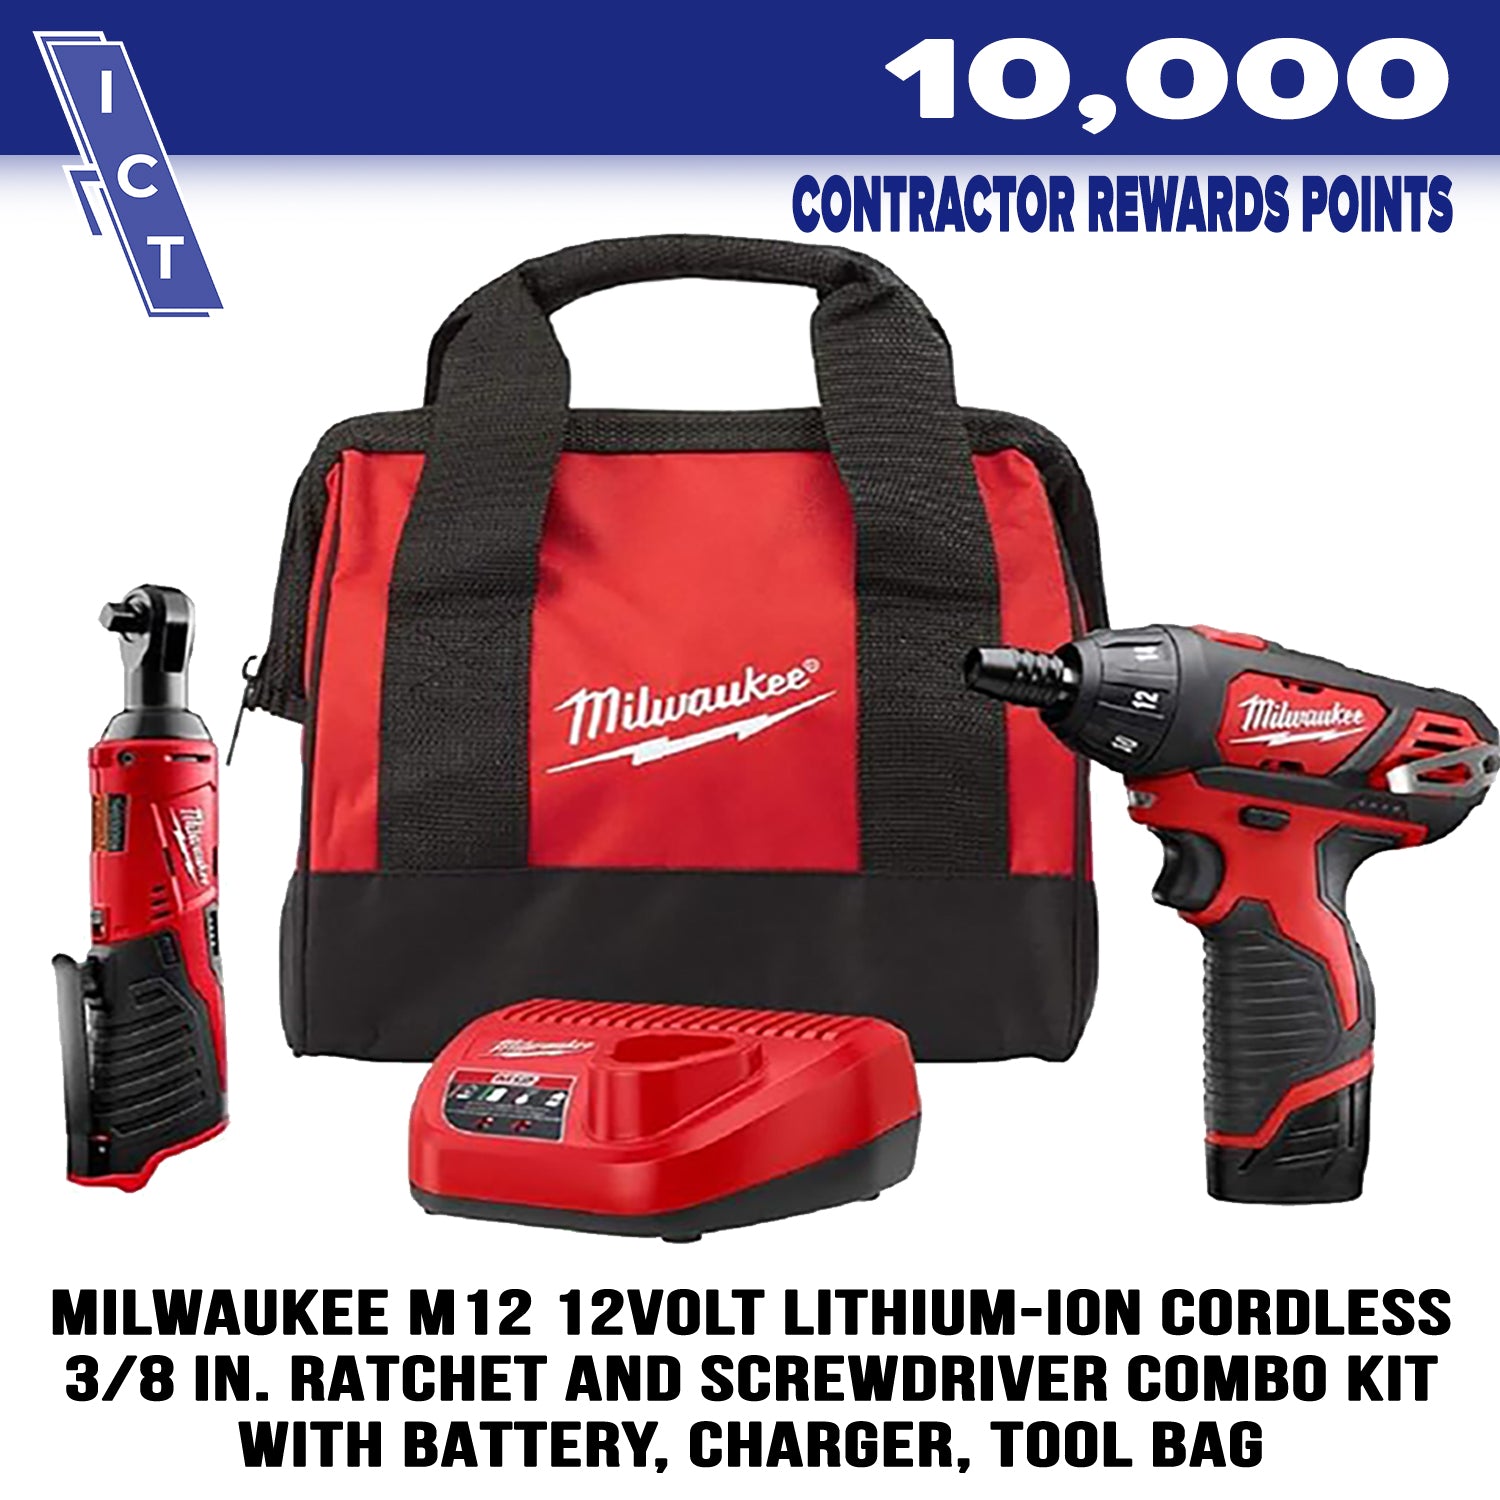 Milwaukee M12 tool kit for 10000 points